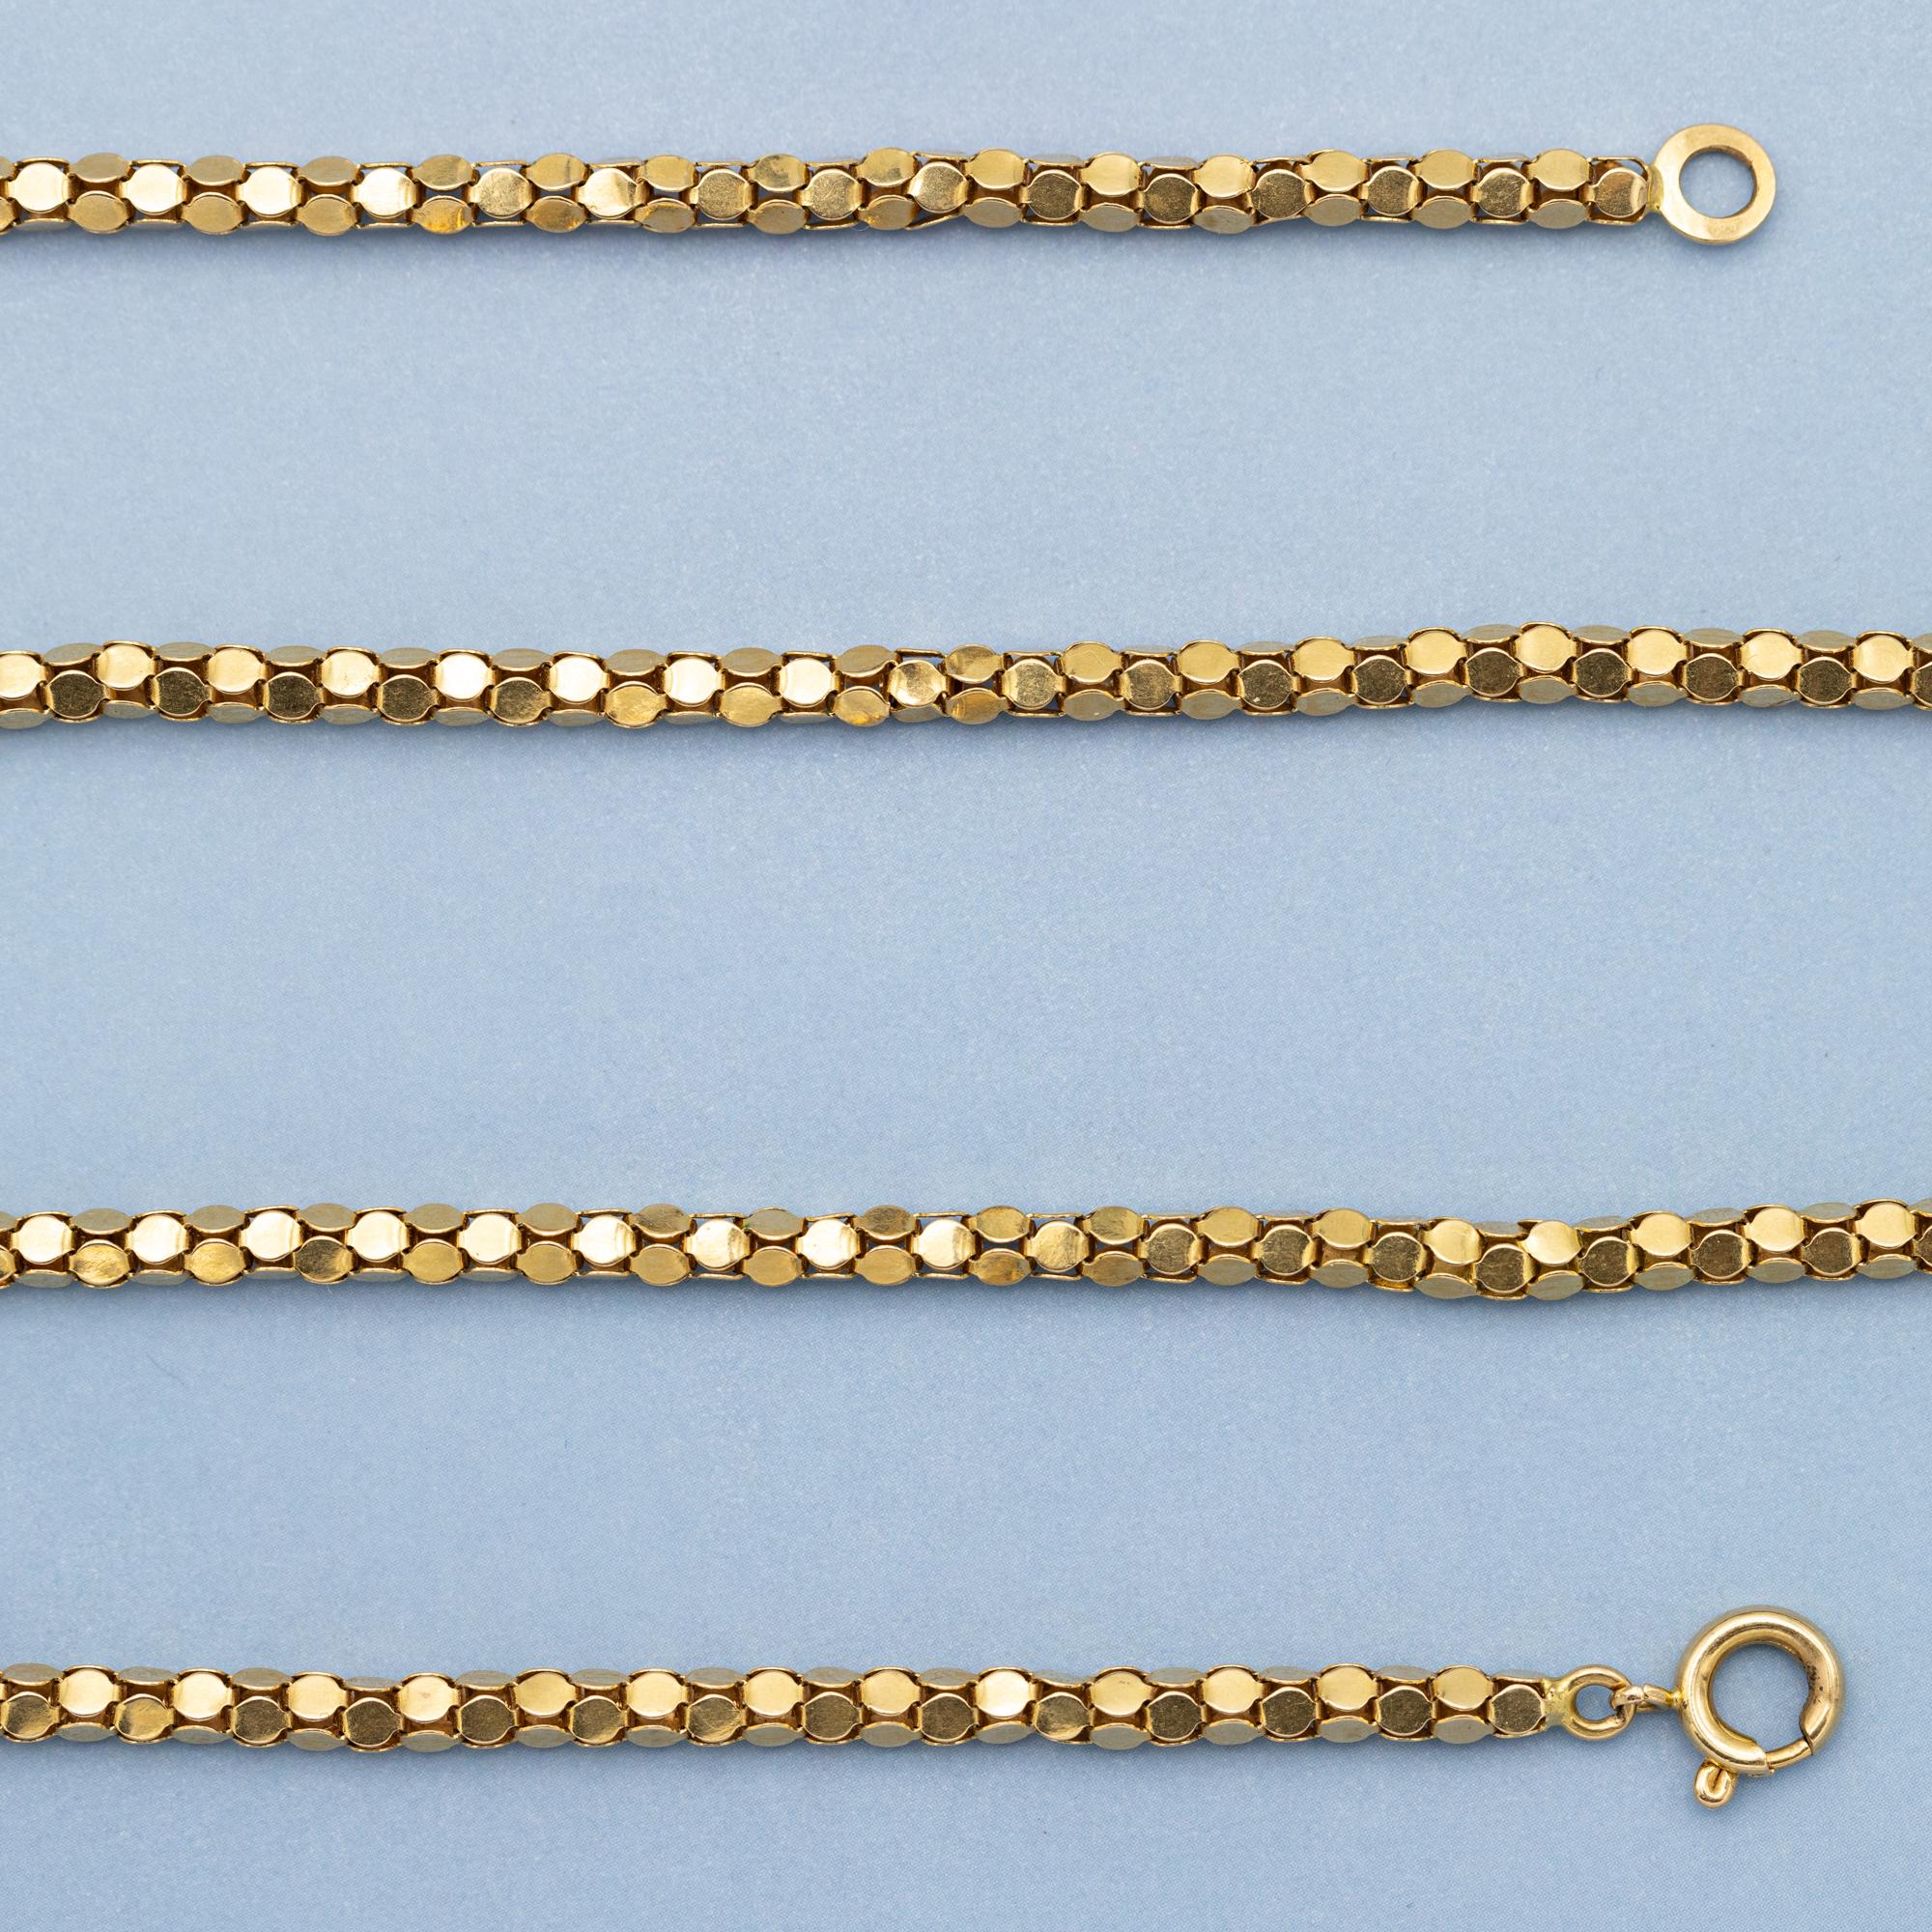 18k solid gold Retro popcorn chain - 1960's necklace - 44.5 cm - 17.25 inch 1